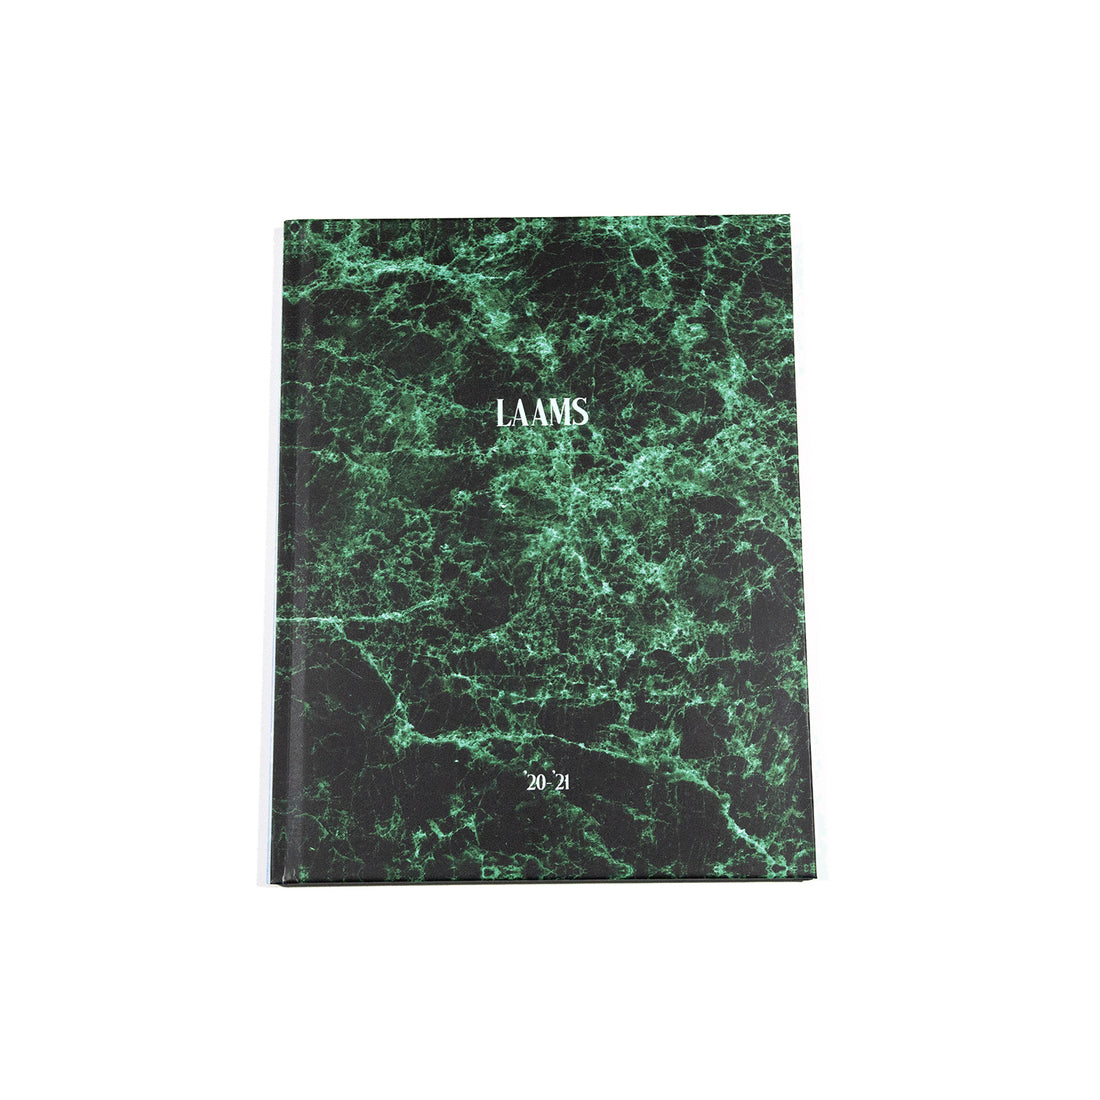 LAAMS 1 Year Anniversary Yearbook